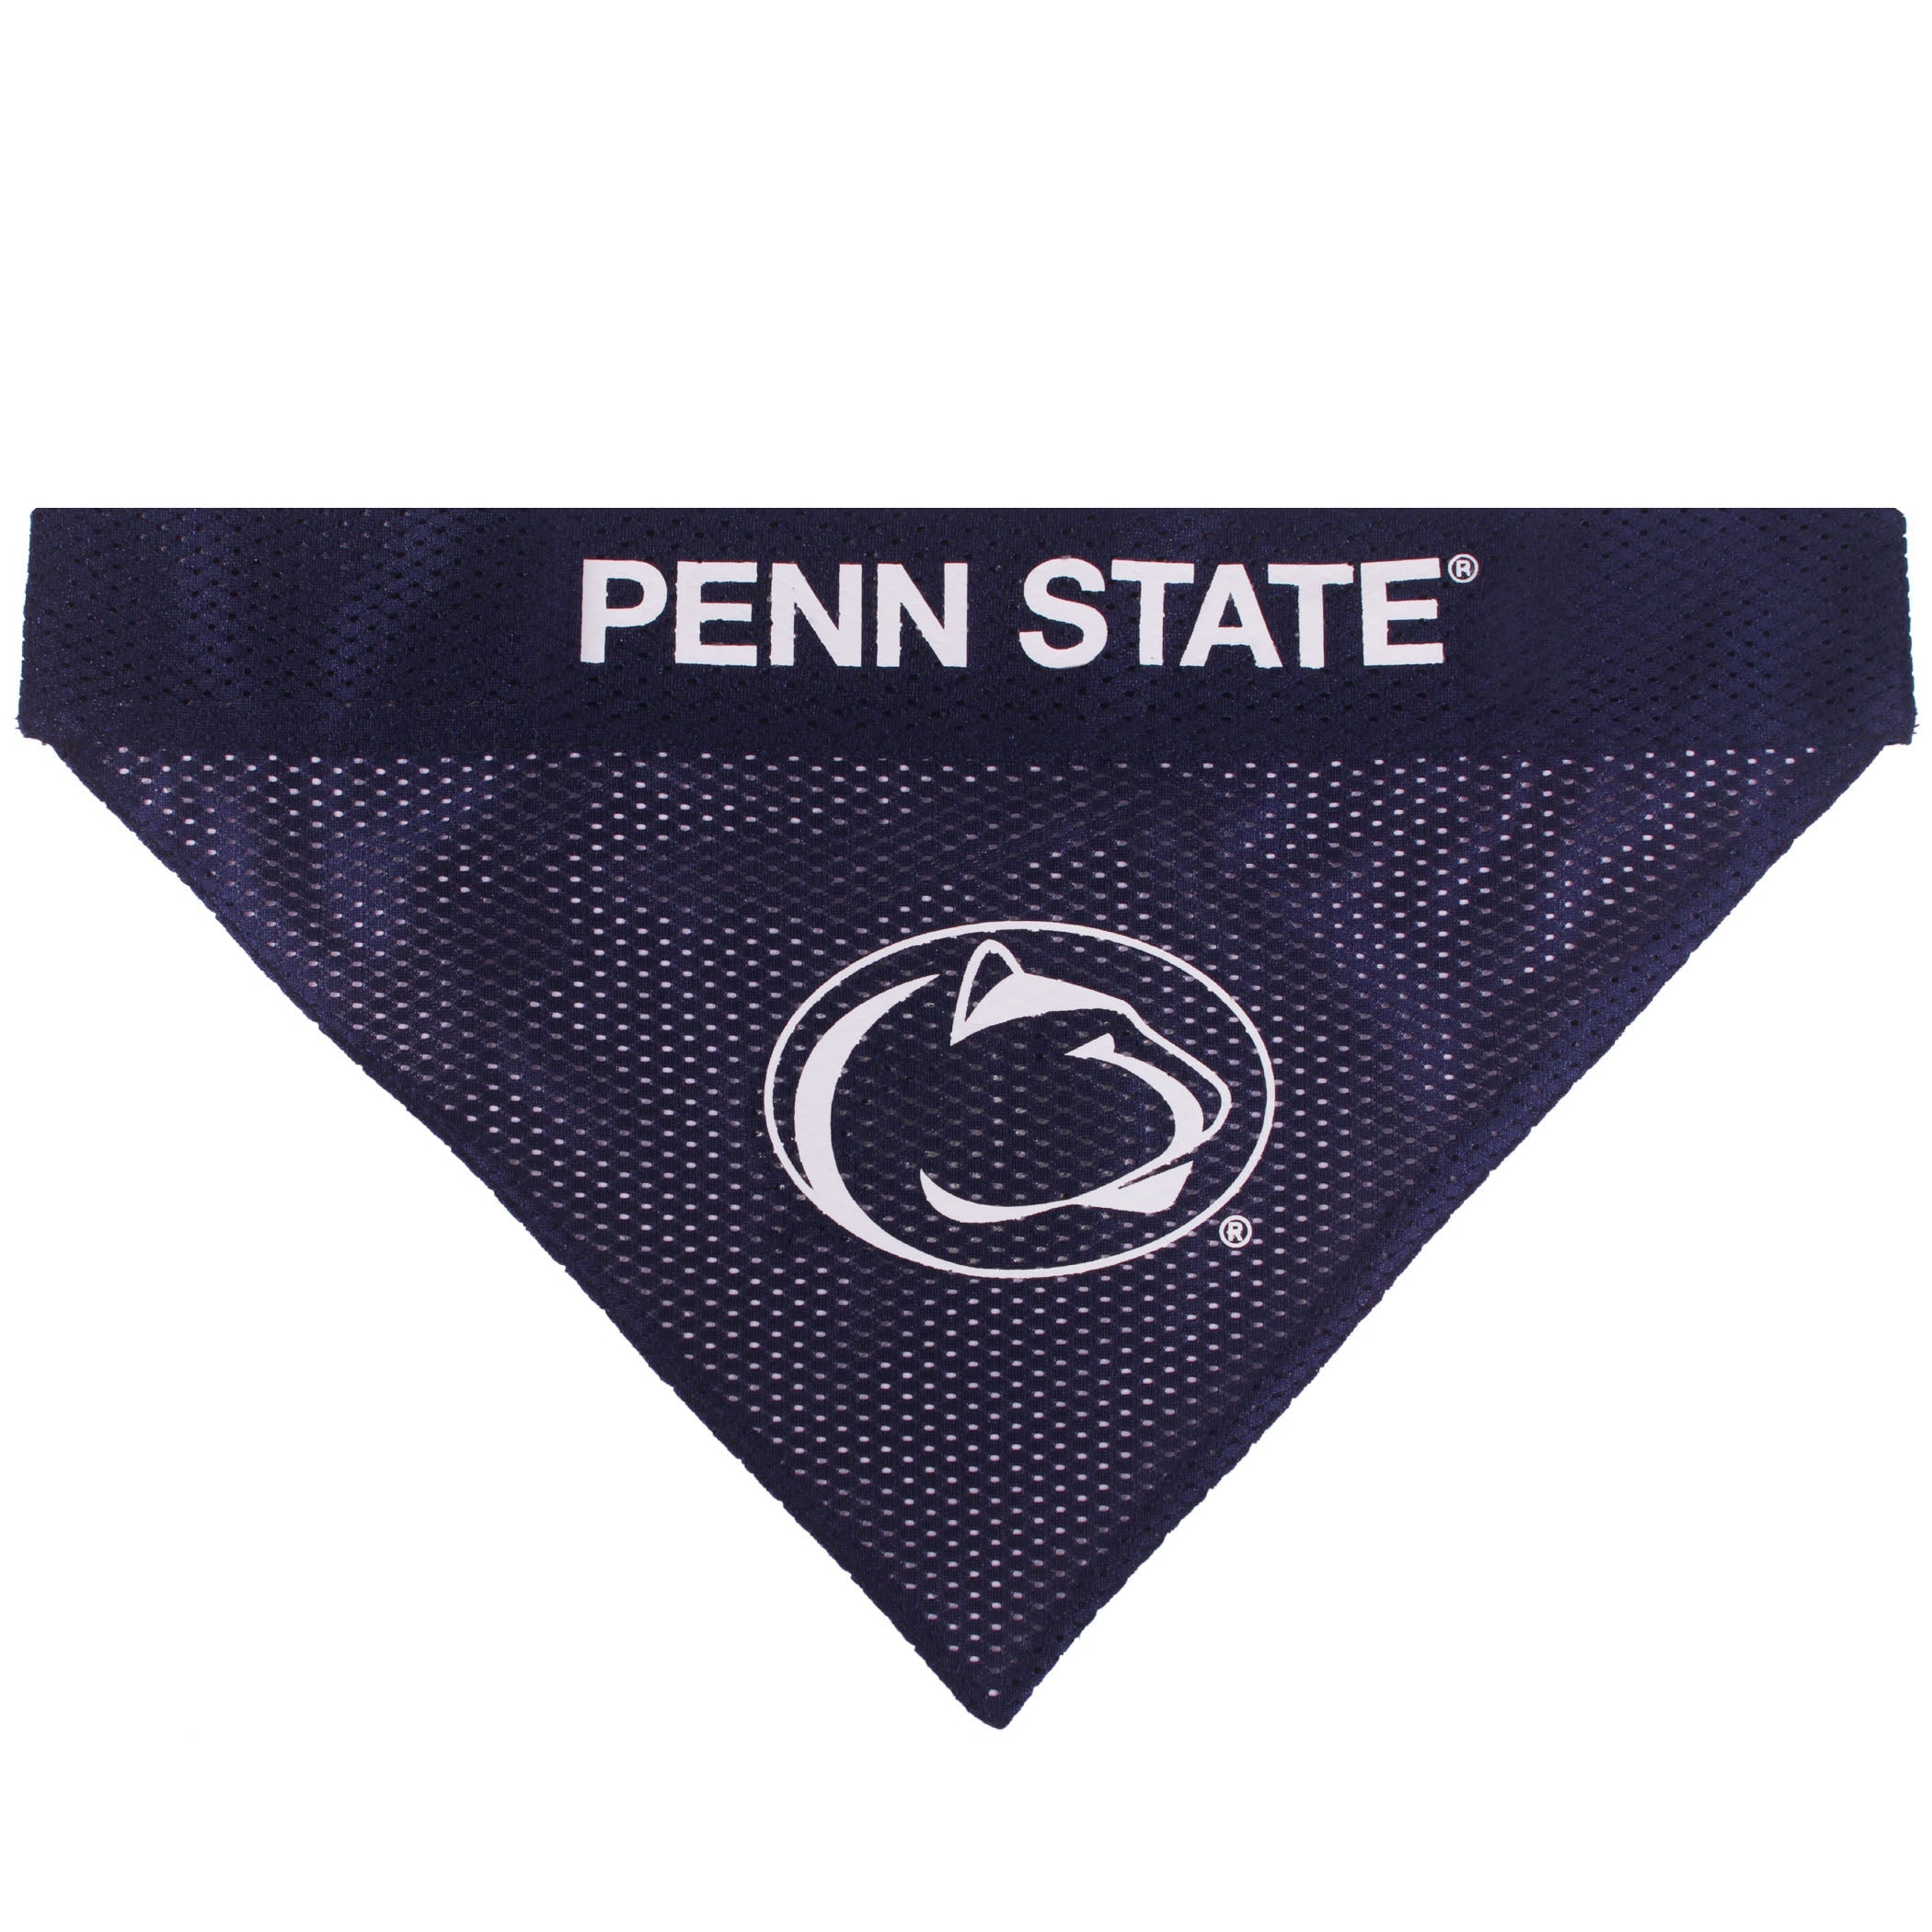 Penn State Reversible Bandana